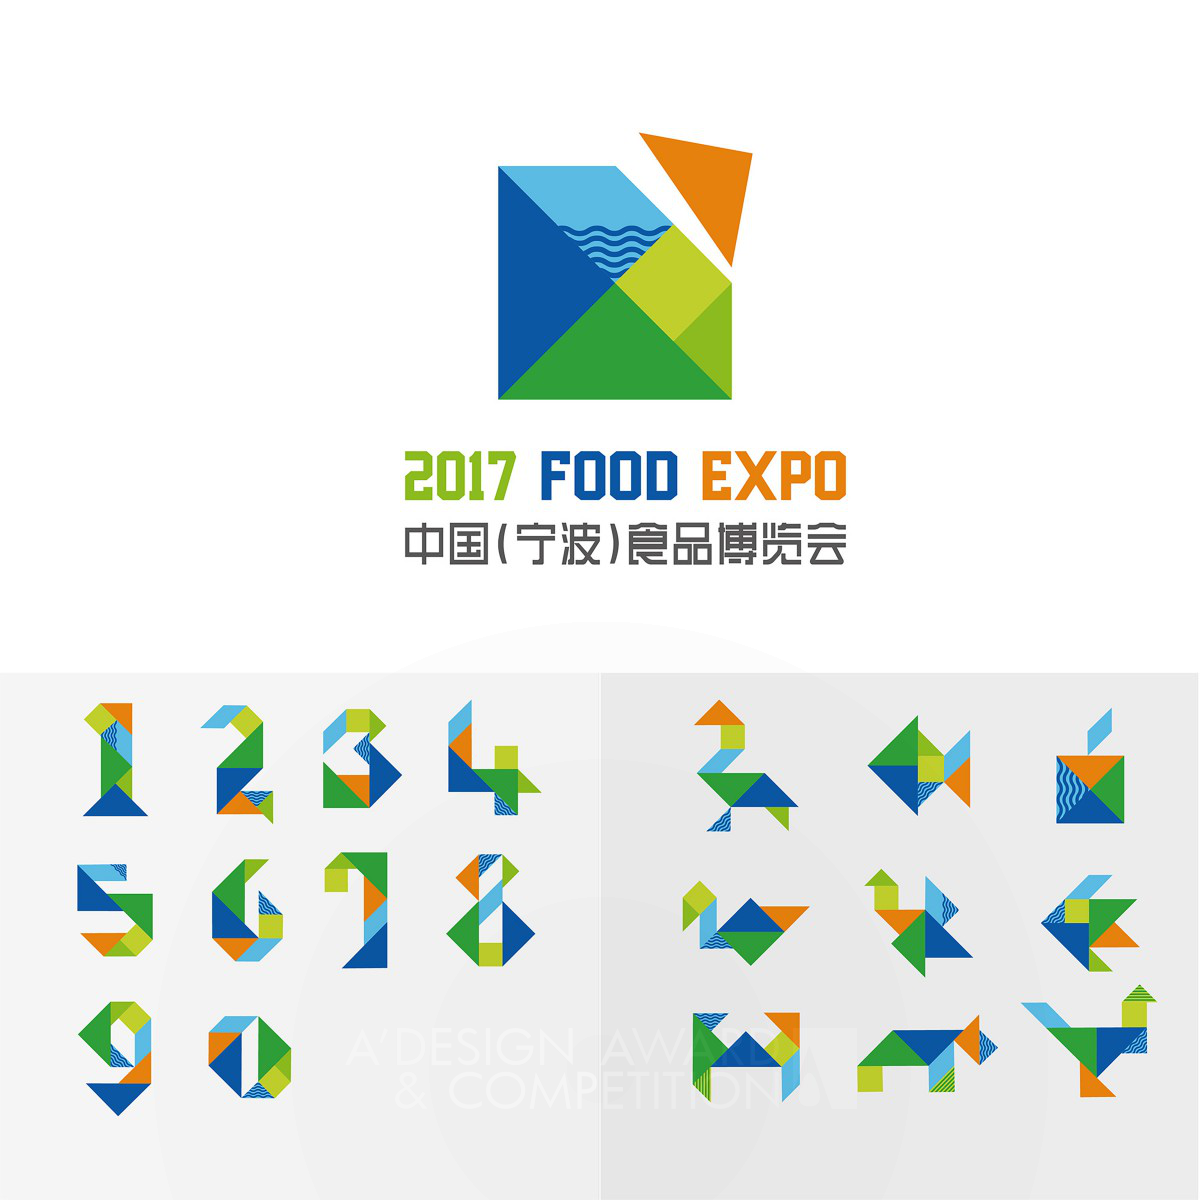 2017 CHINA FOOD EXPO 2017 CHINA FOOD EXPO LOGO by Mao Ming